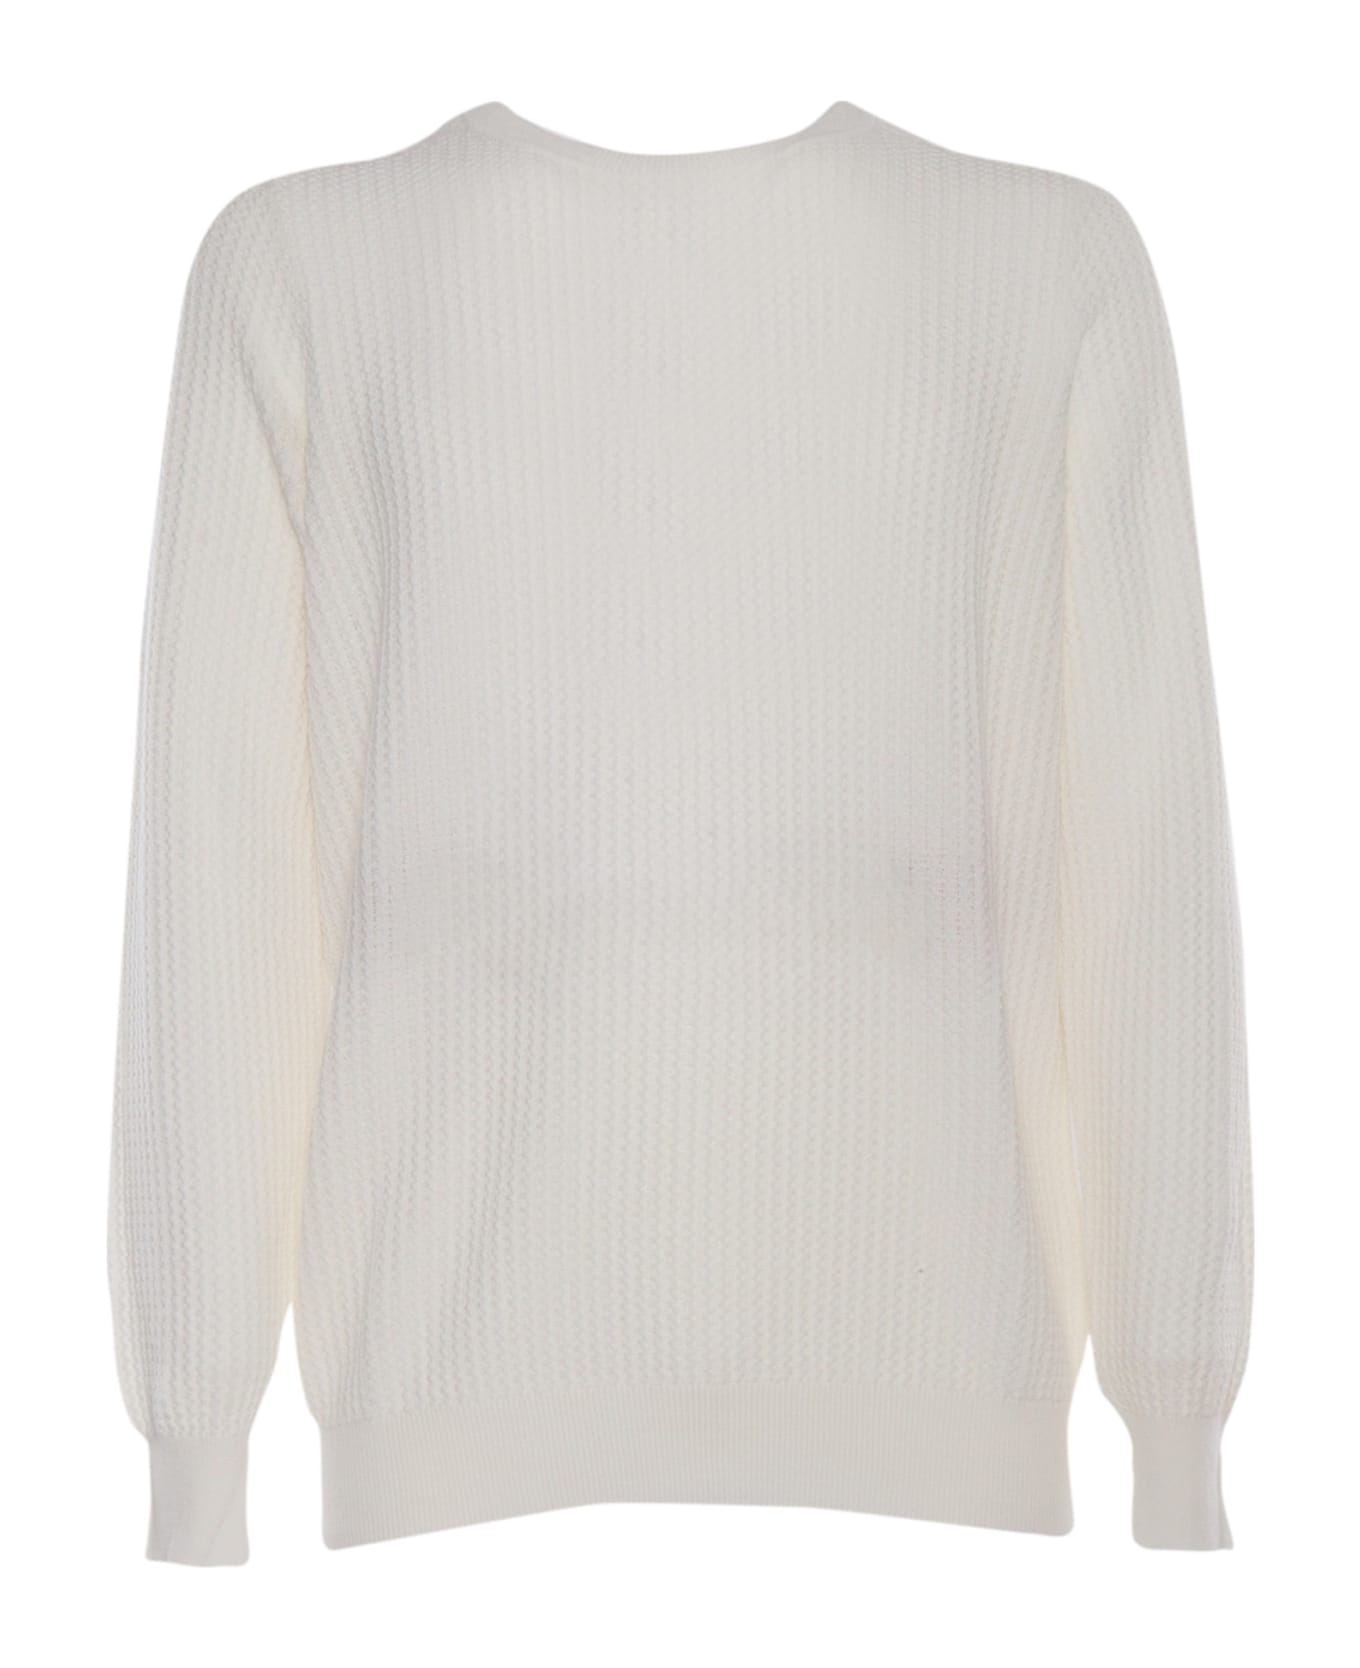 Peserico Men's Sweater - WHITE